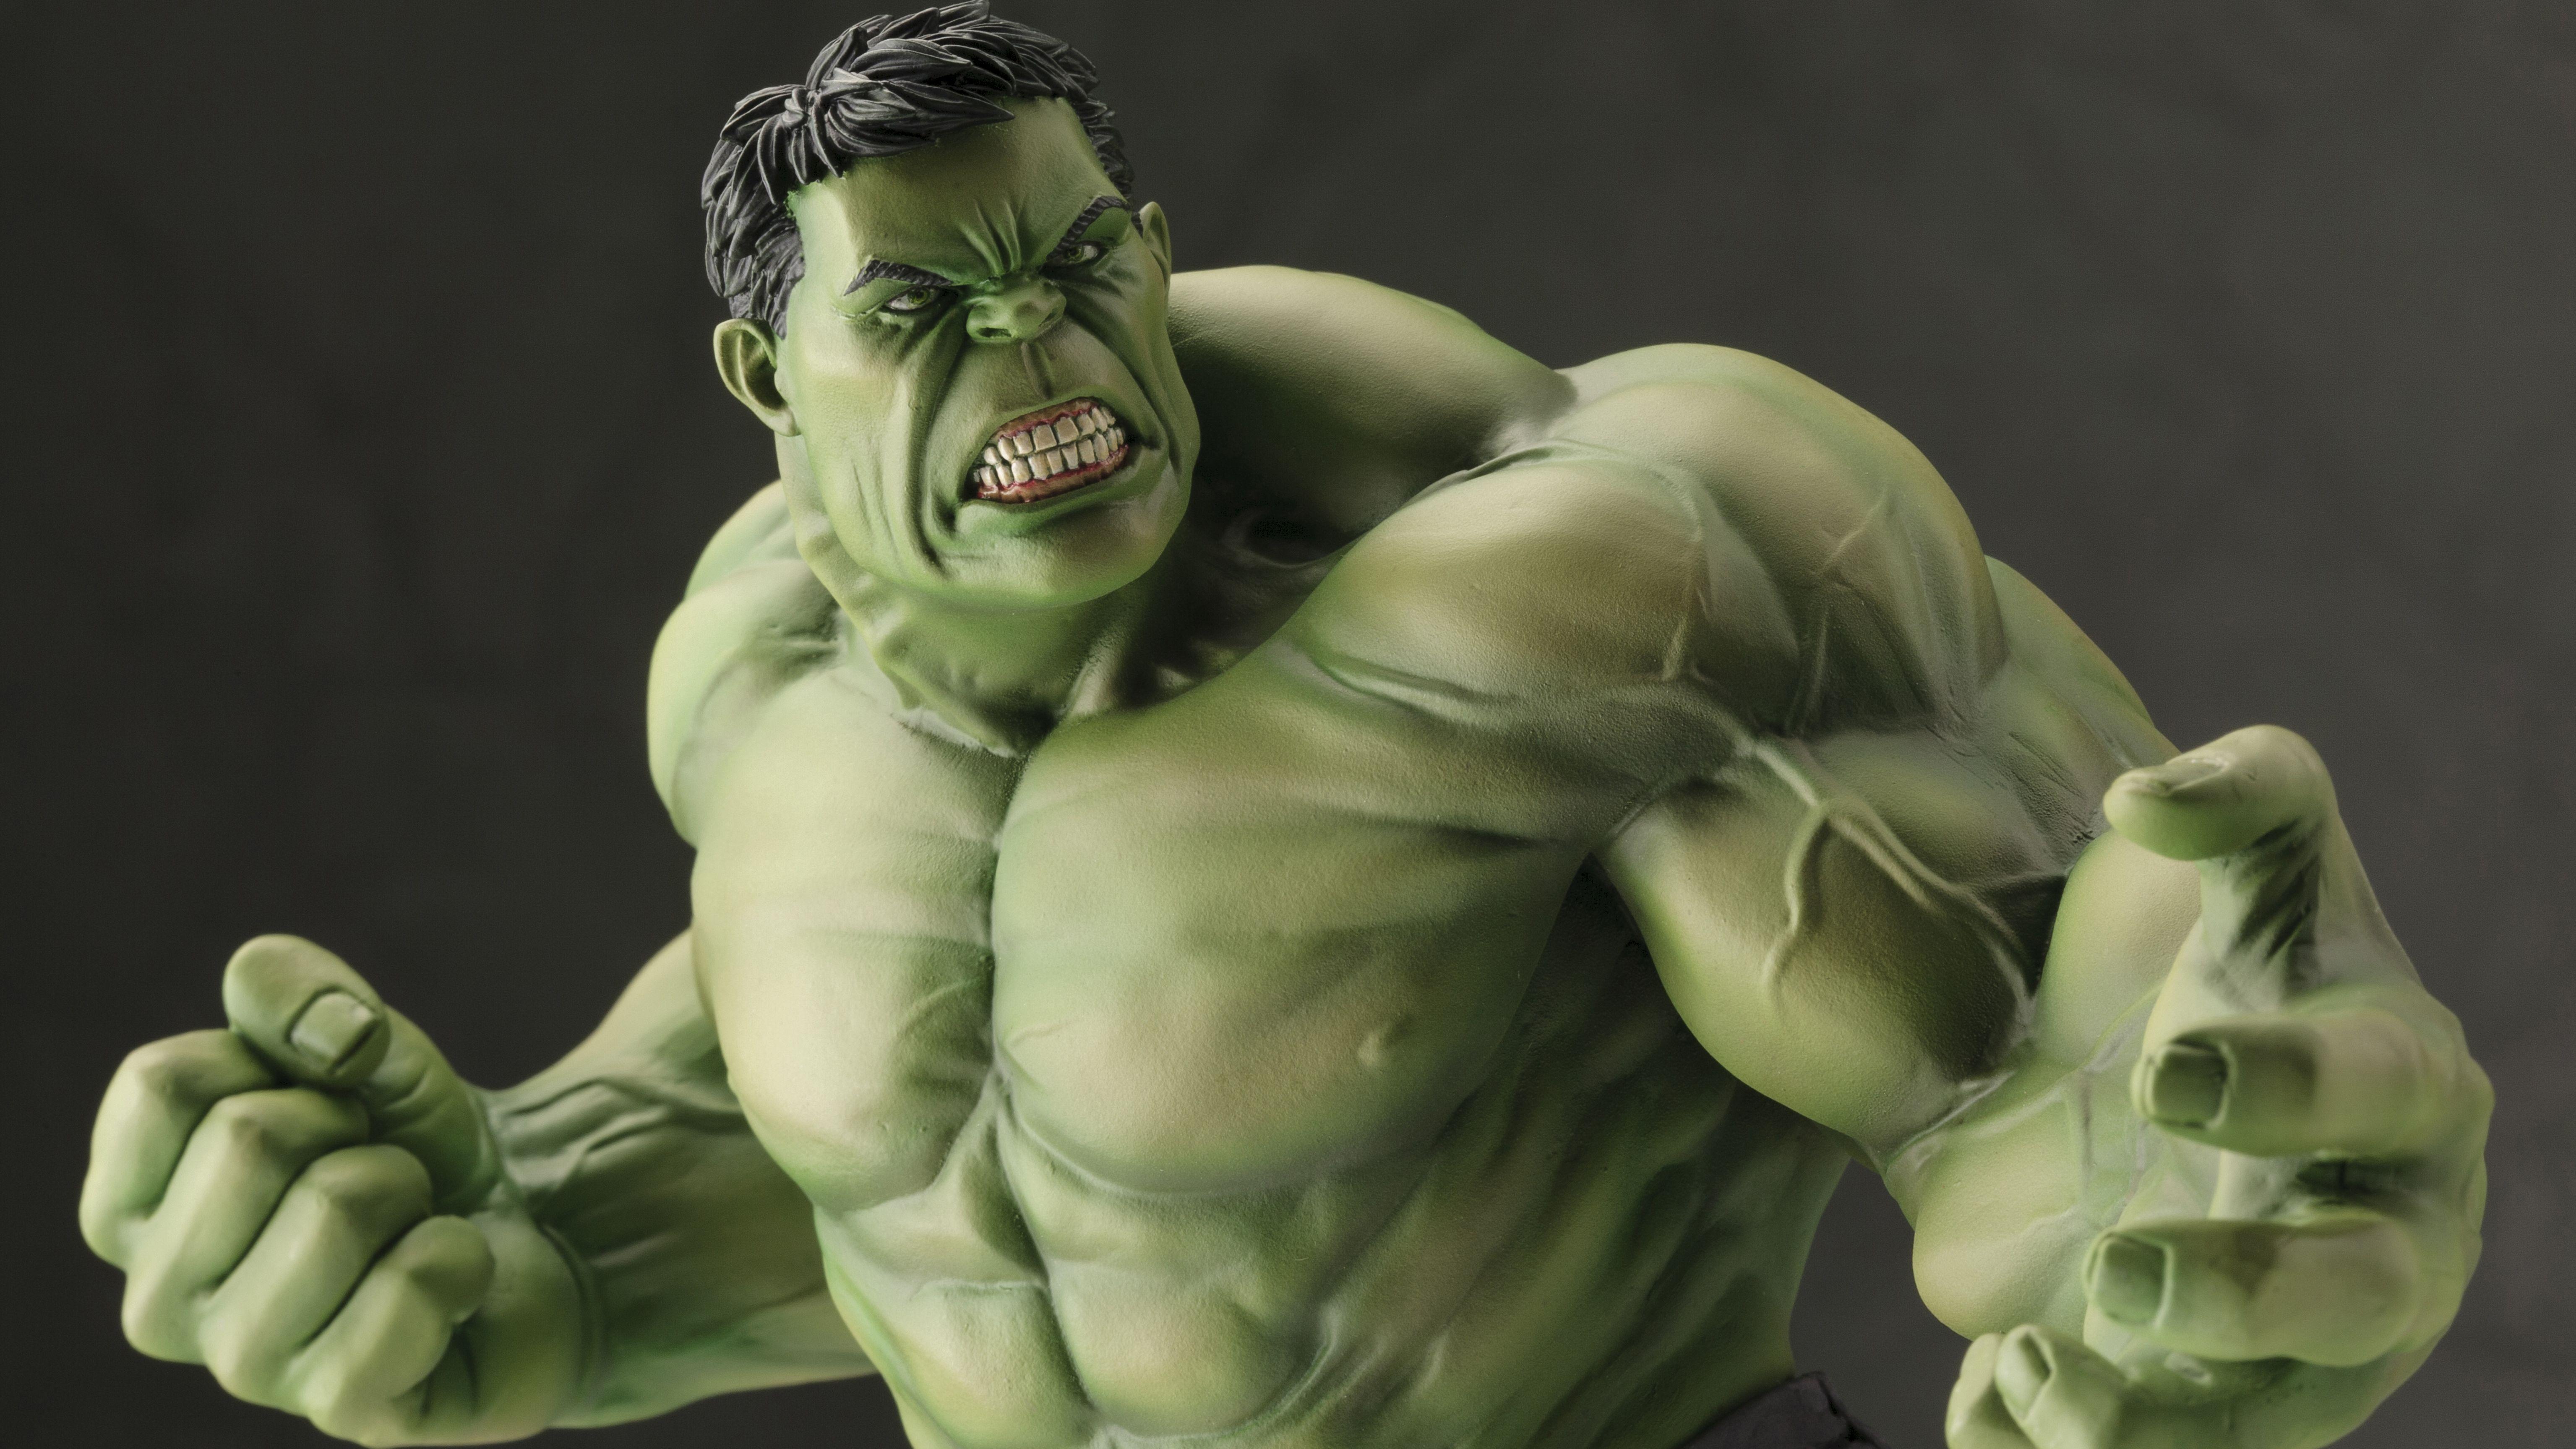 10 Best Cool Hulk Hd Wallpapers FULL HD 1920×1080 For PC Background 2019  FREE DOWNLOAD | Wallpaper avengers, Hulk, Incredible hulk